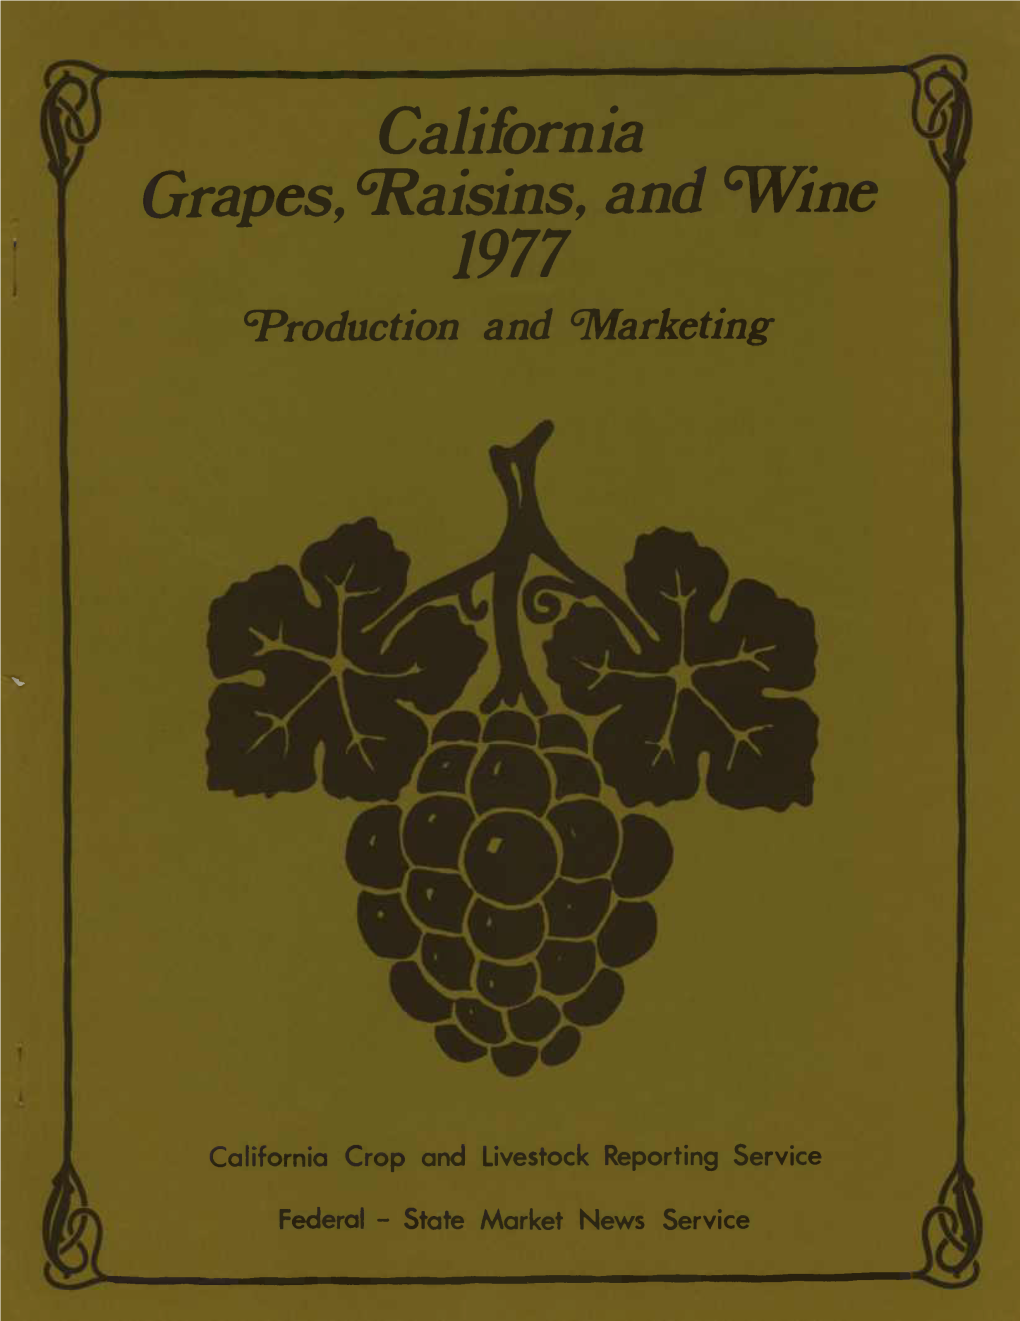 California Grapes, Raisins, and Wine 1977 Production and Marketing